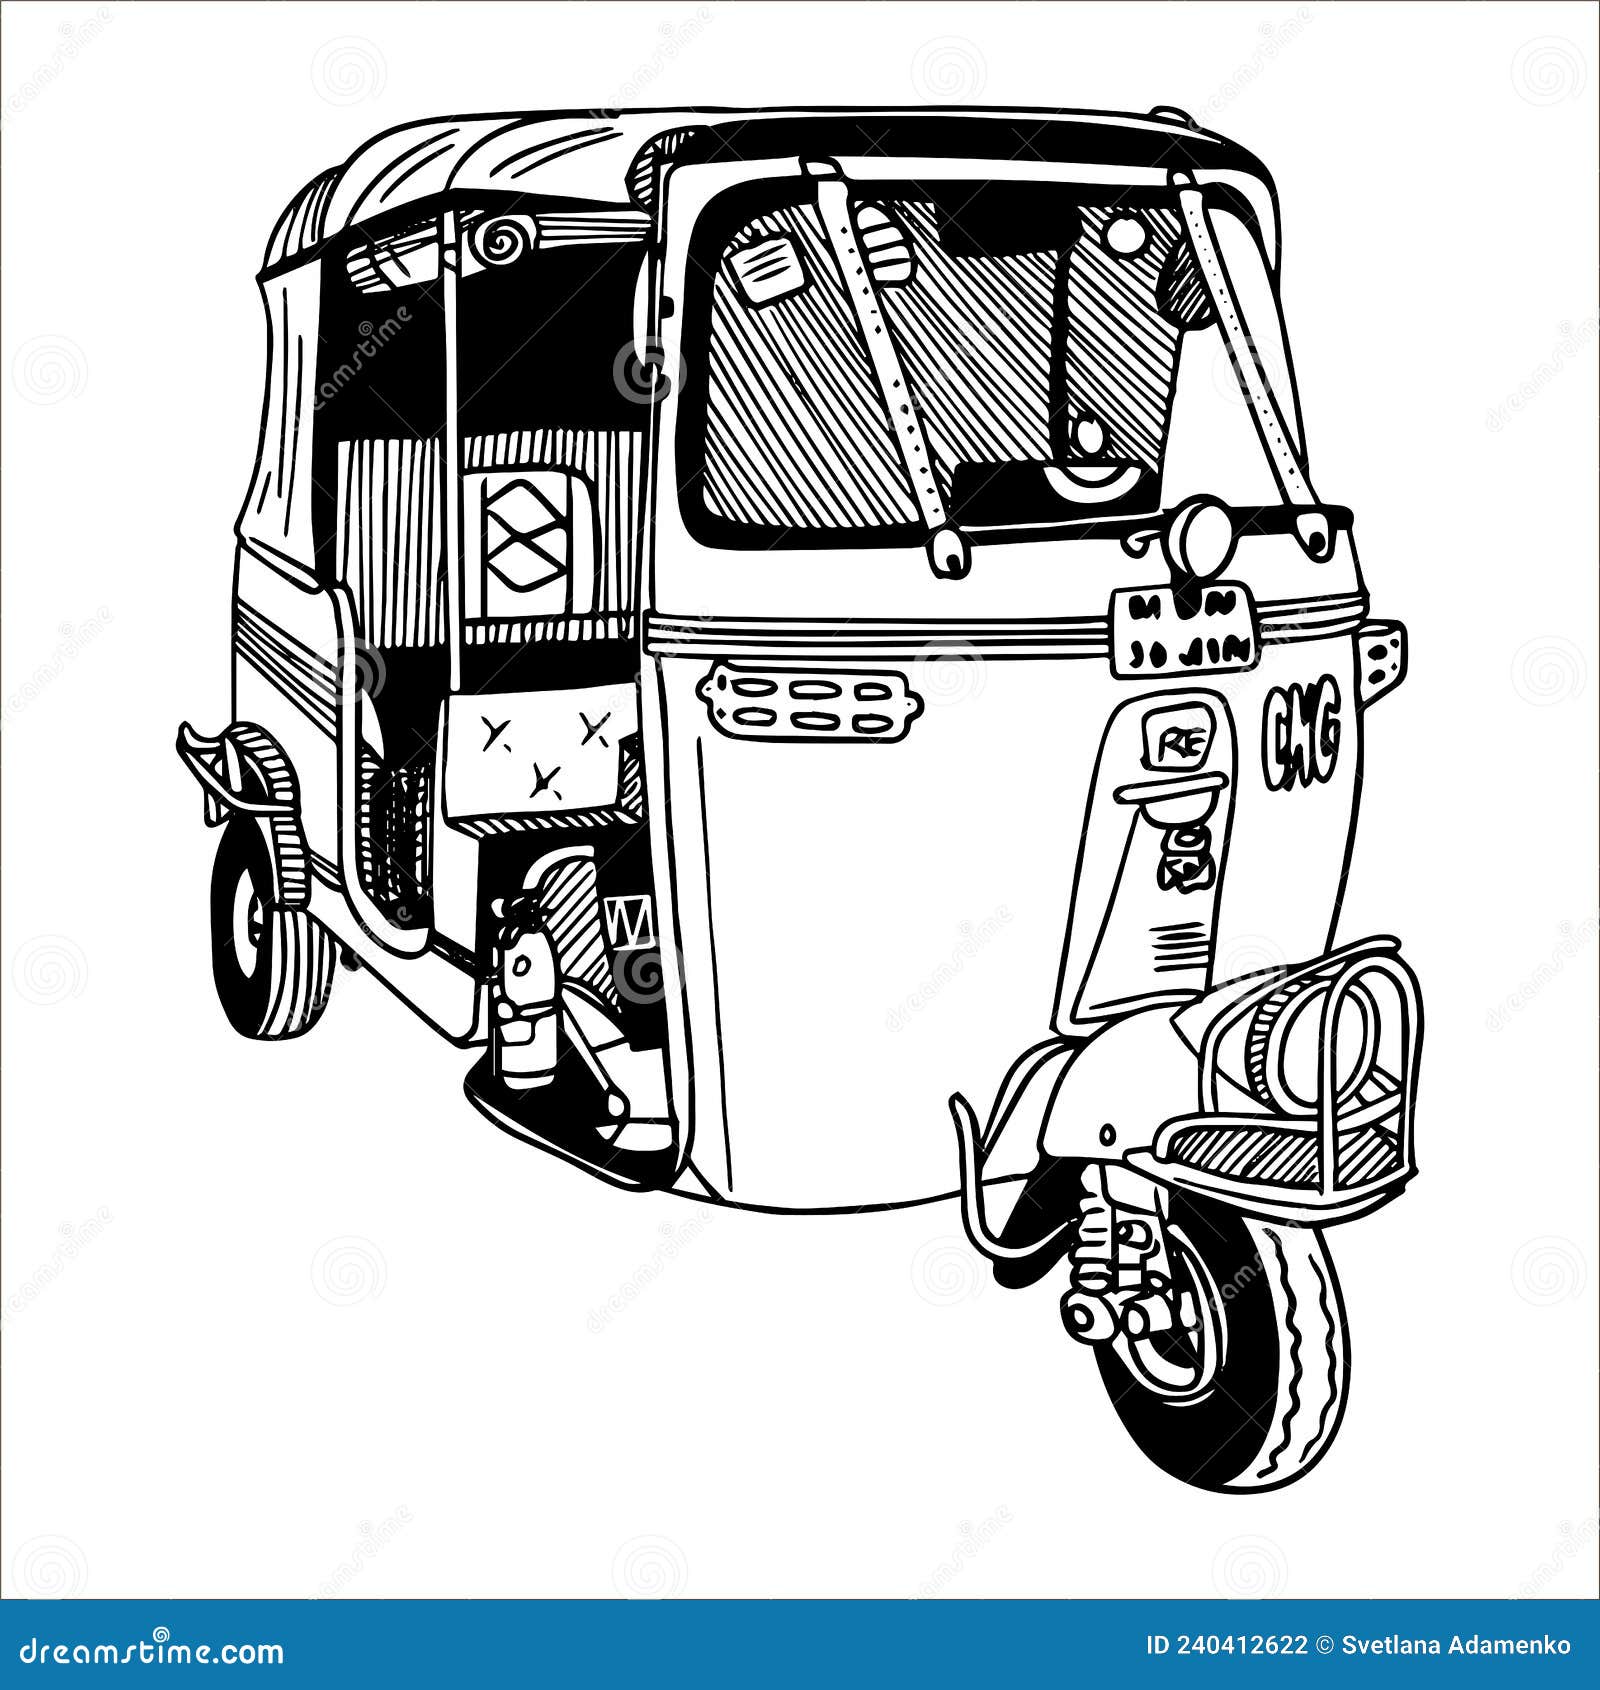 Rickshaw Vector Images (over 2,300)